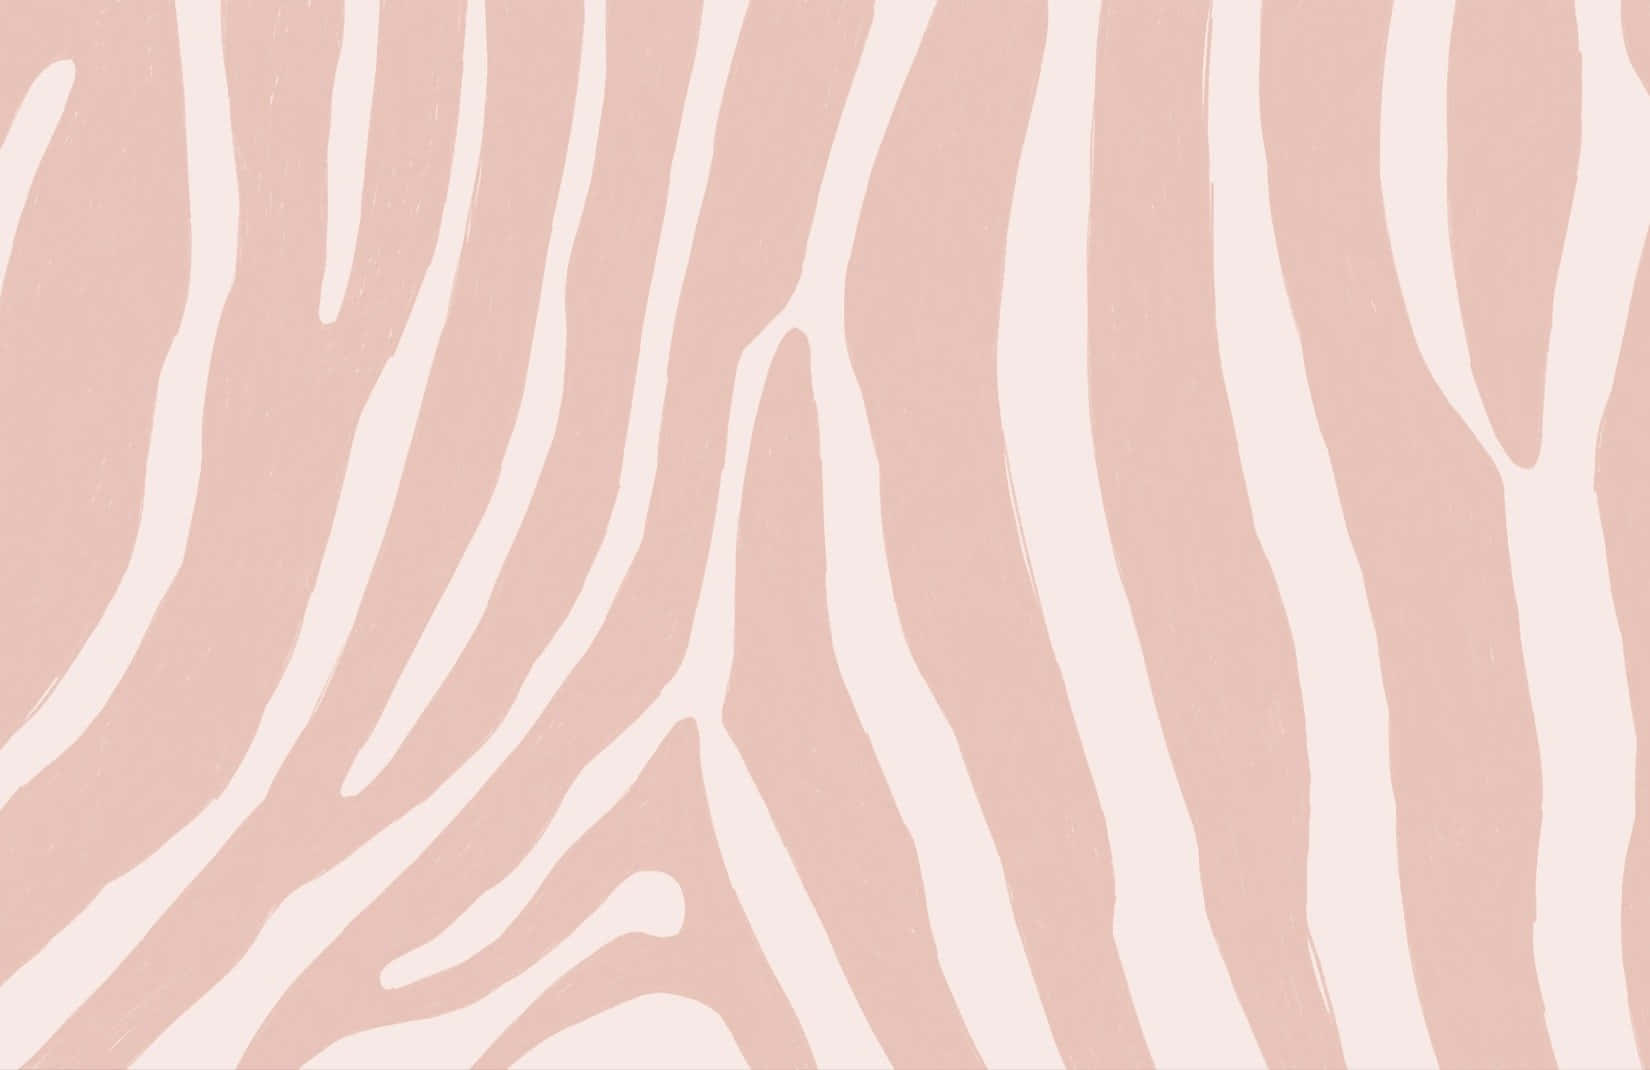 Sweet Dreams Of Pink Zebra Stripes Background